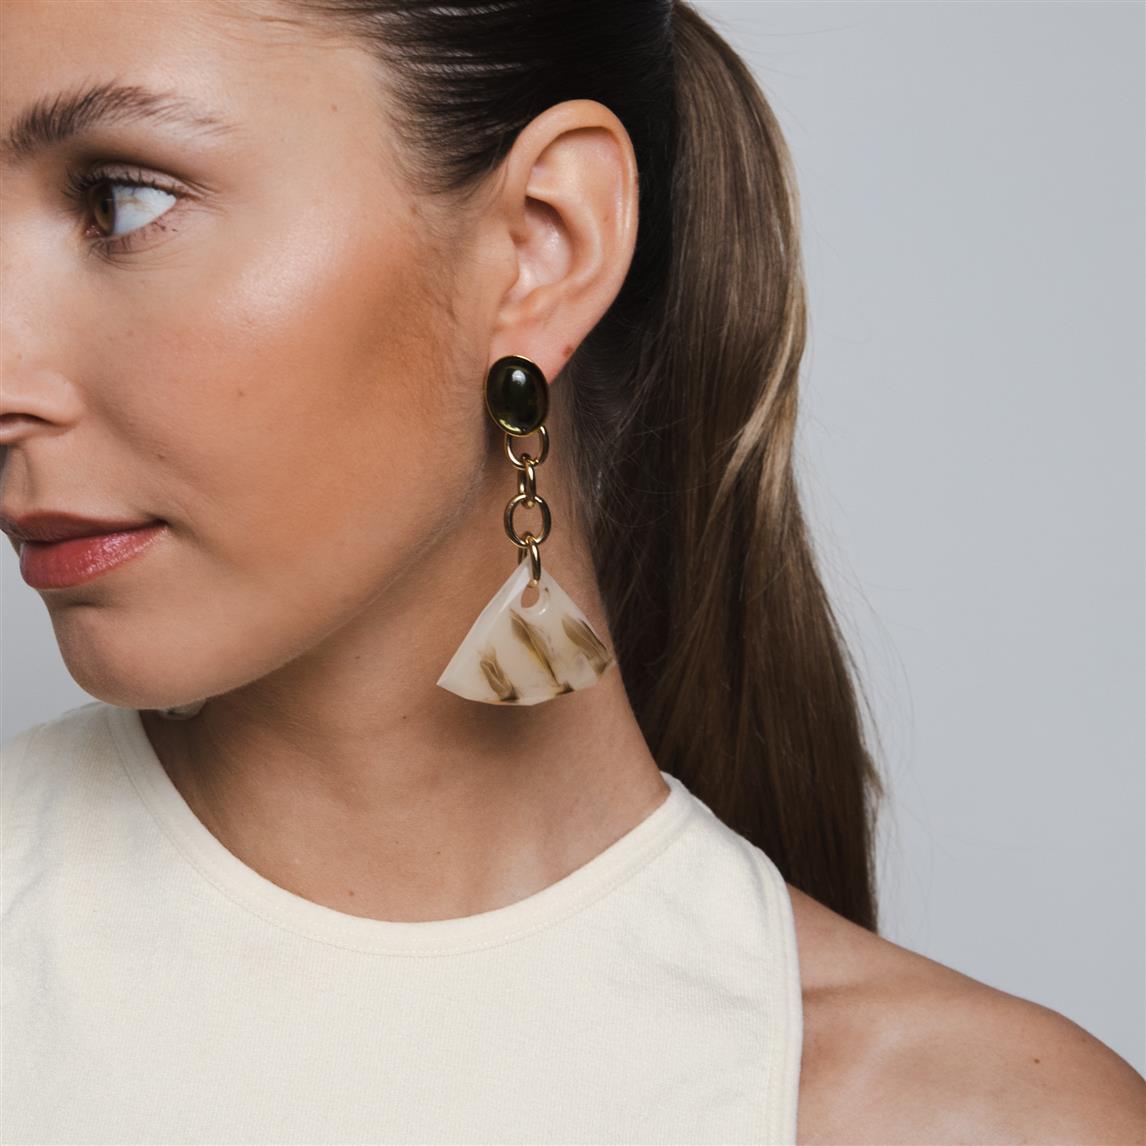 Gianna marbled beige earrings